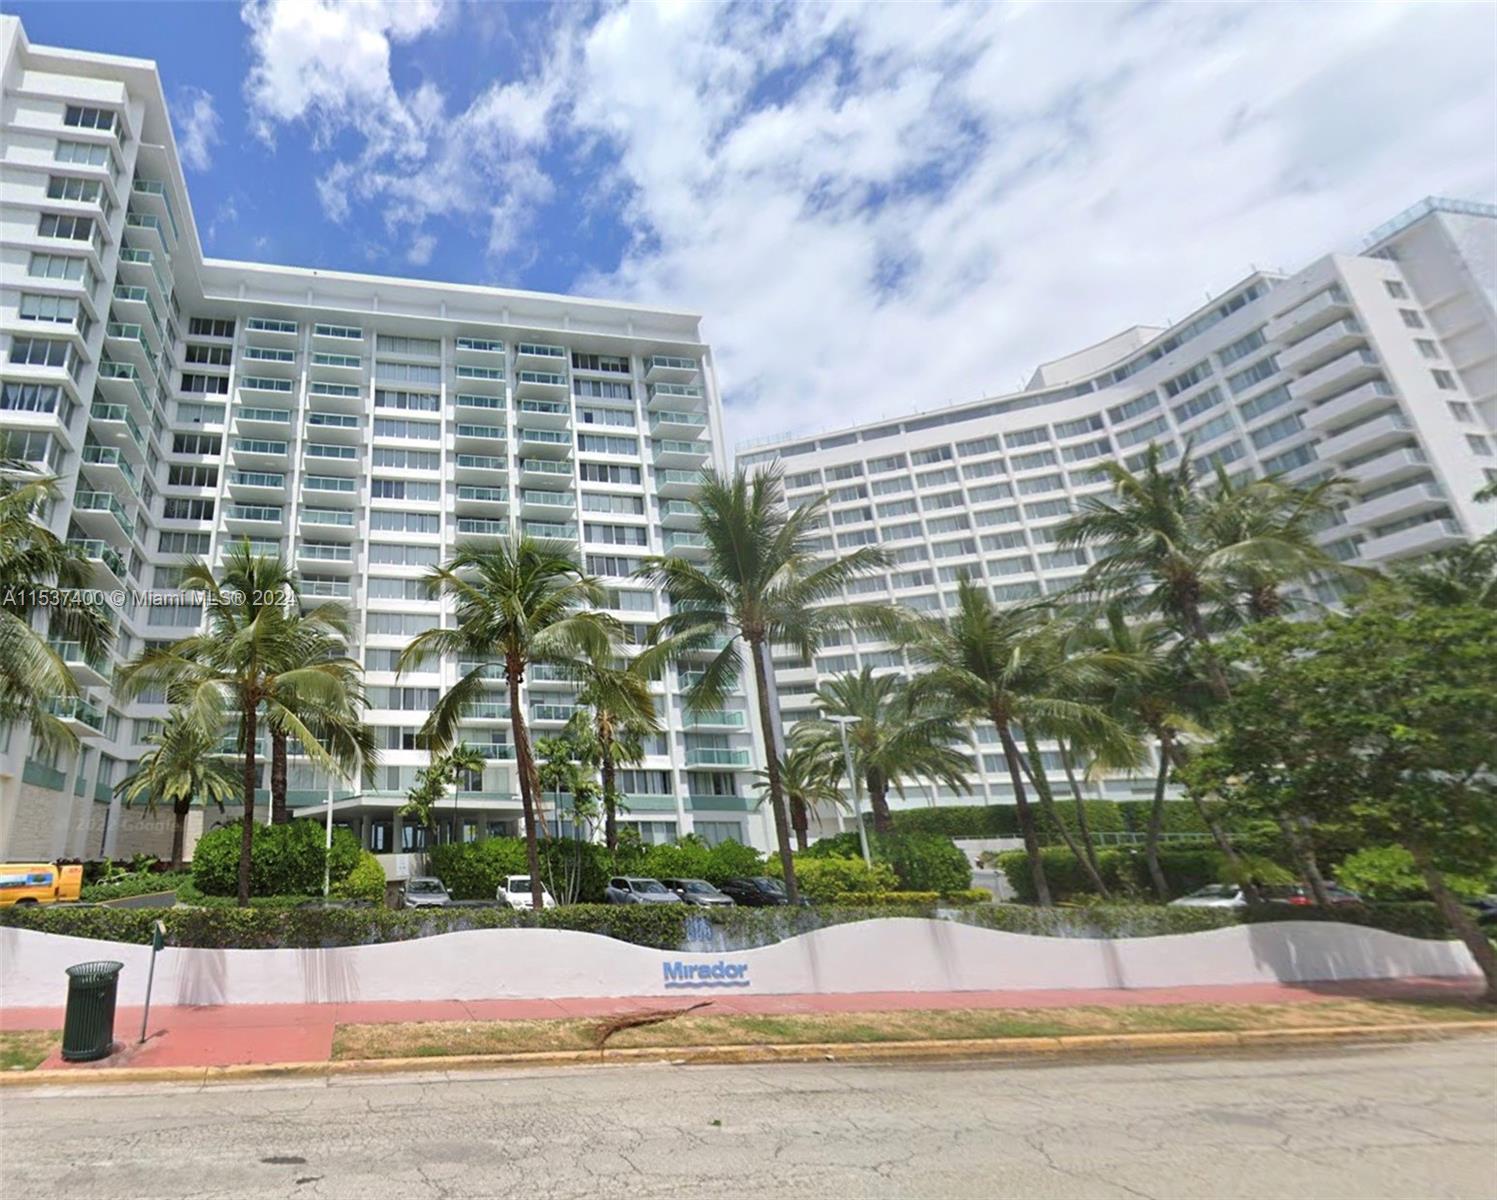 Photo of 1000 West Ave #1405 in Miami Beach, FL